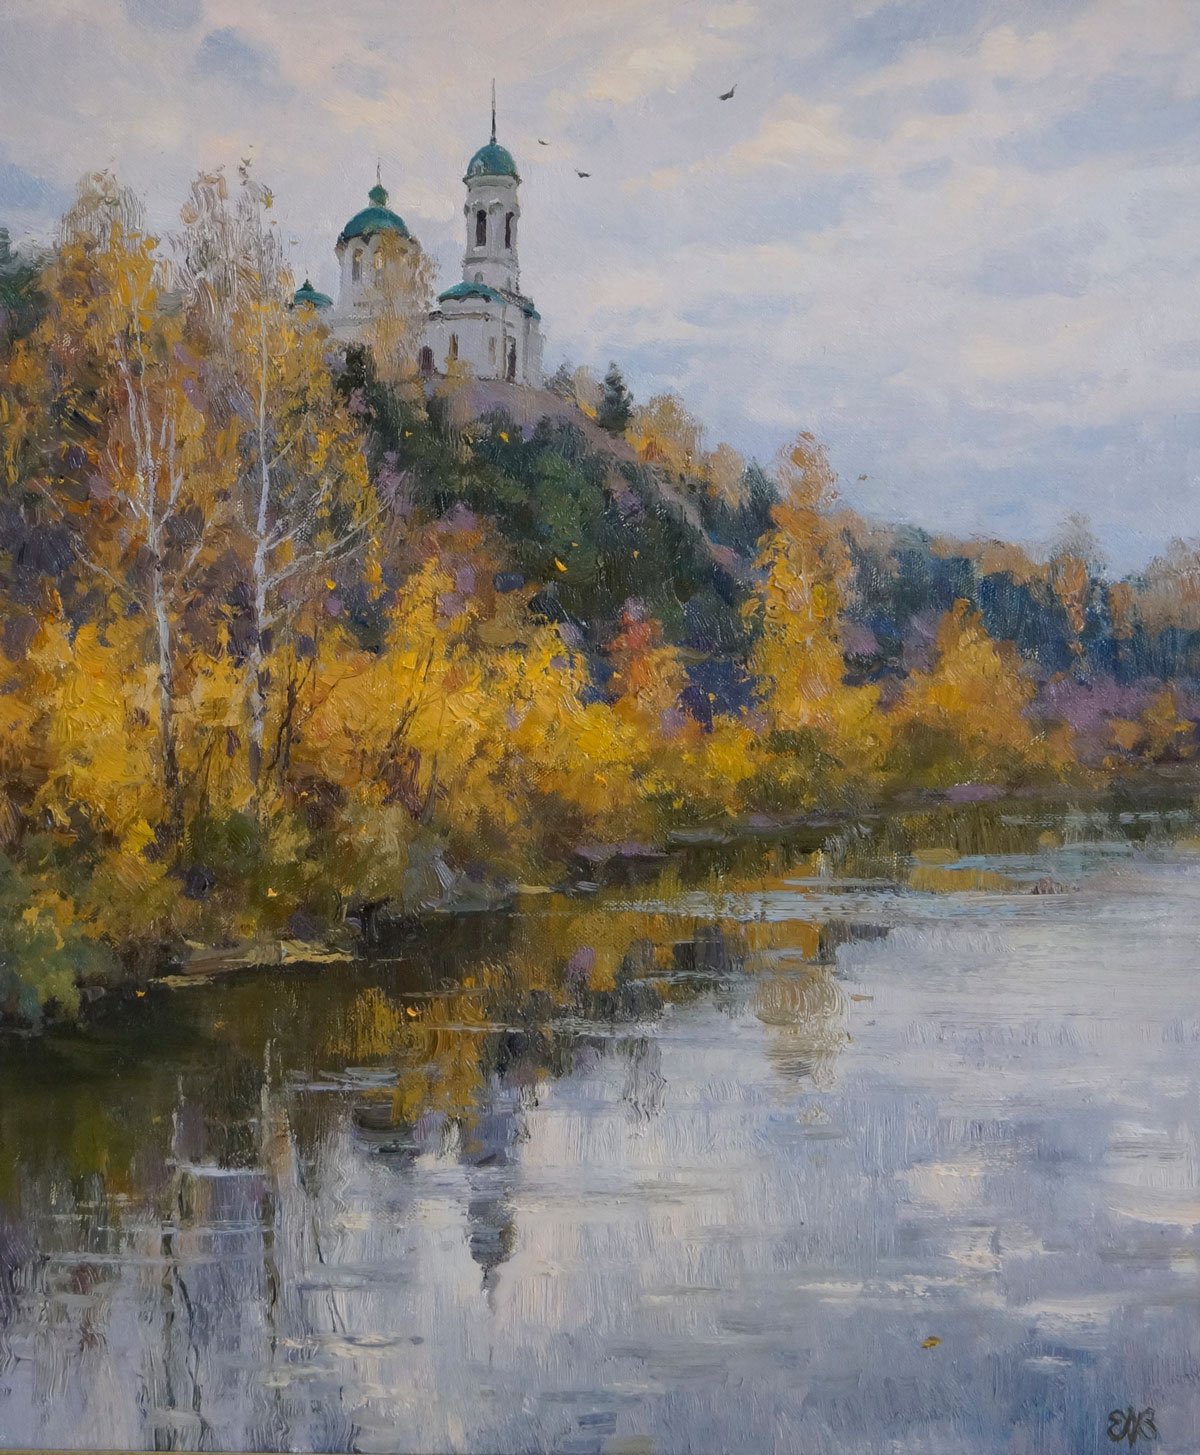 Rezh. Church of St. John - 1, Alexey Efremov, Buy the painting Oil